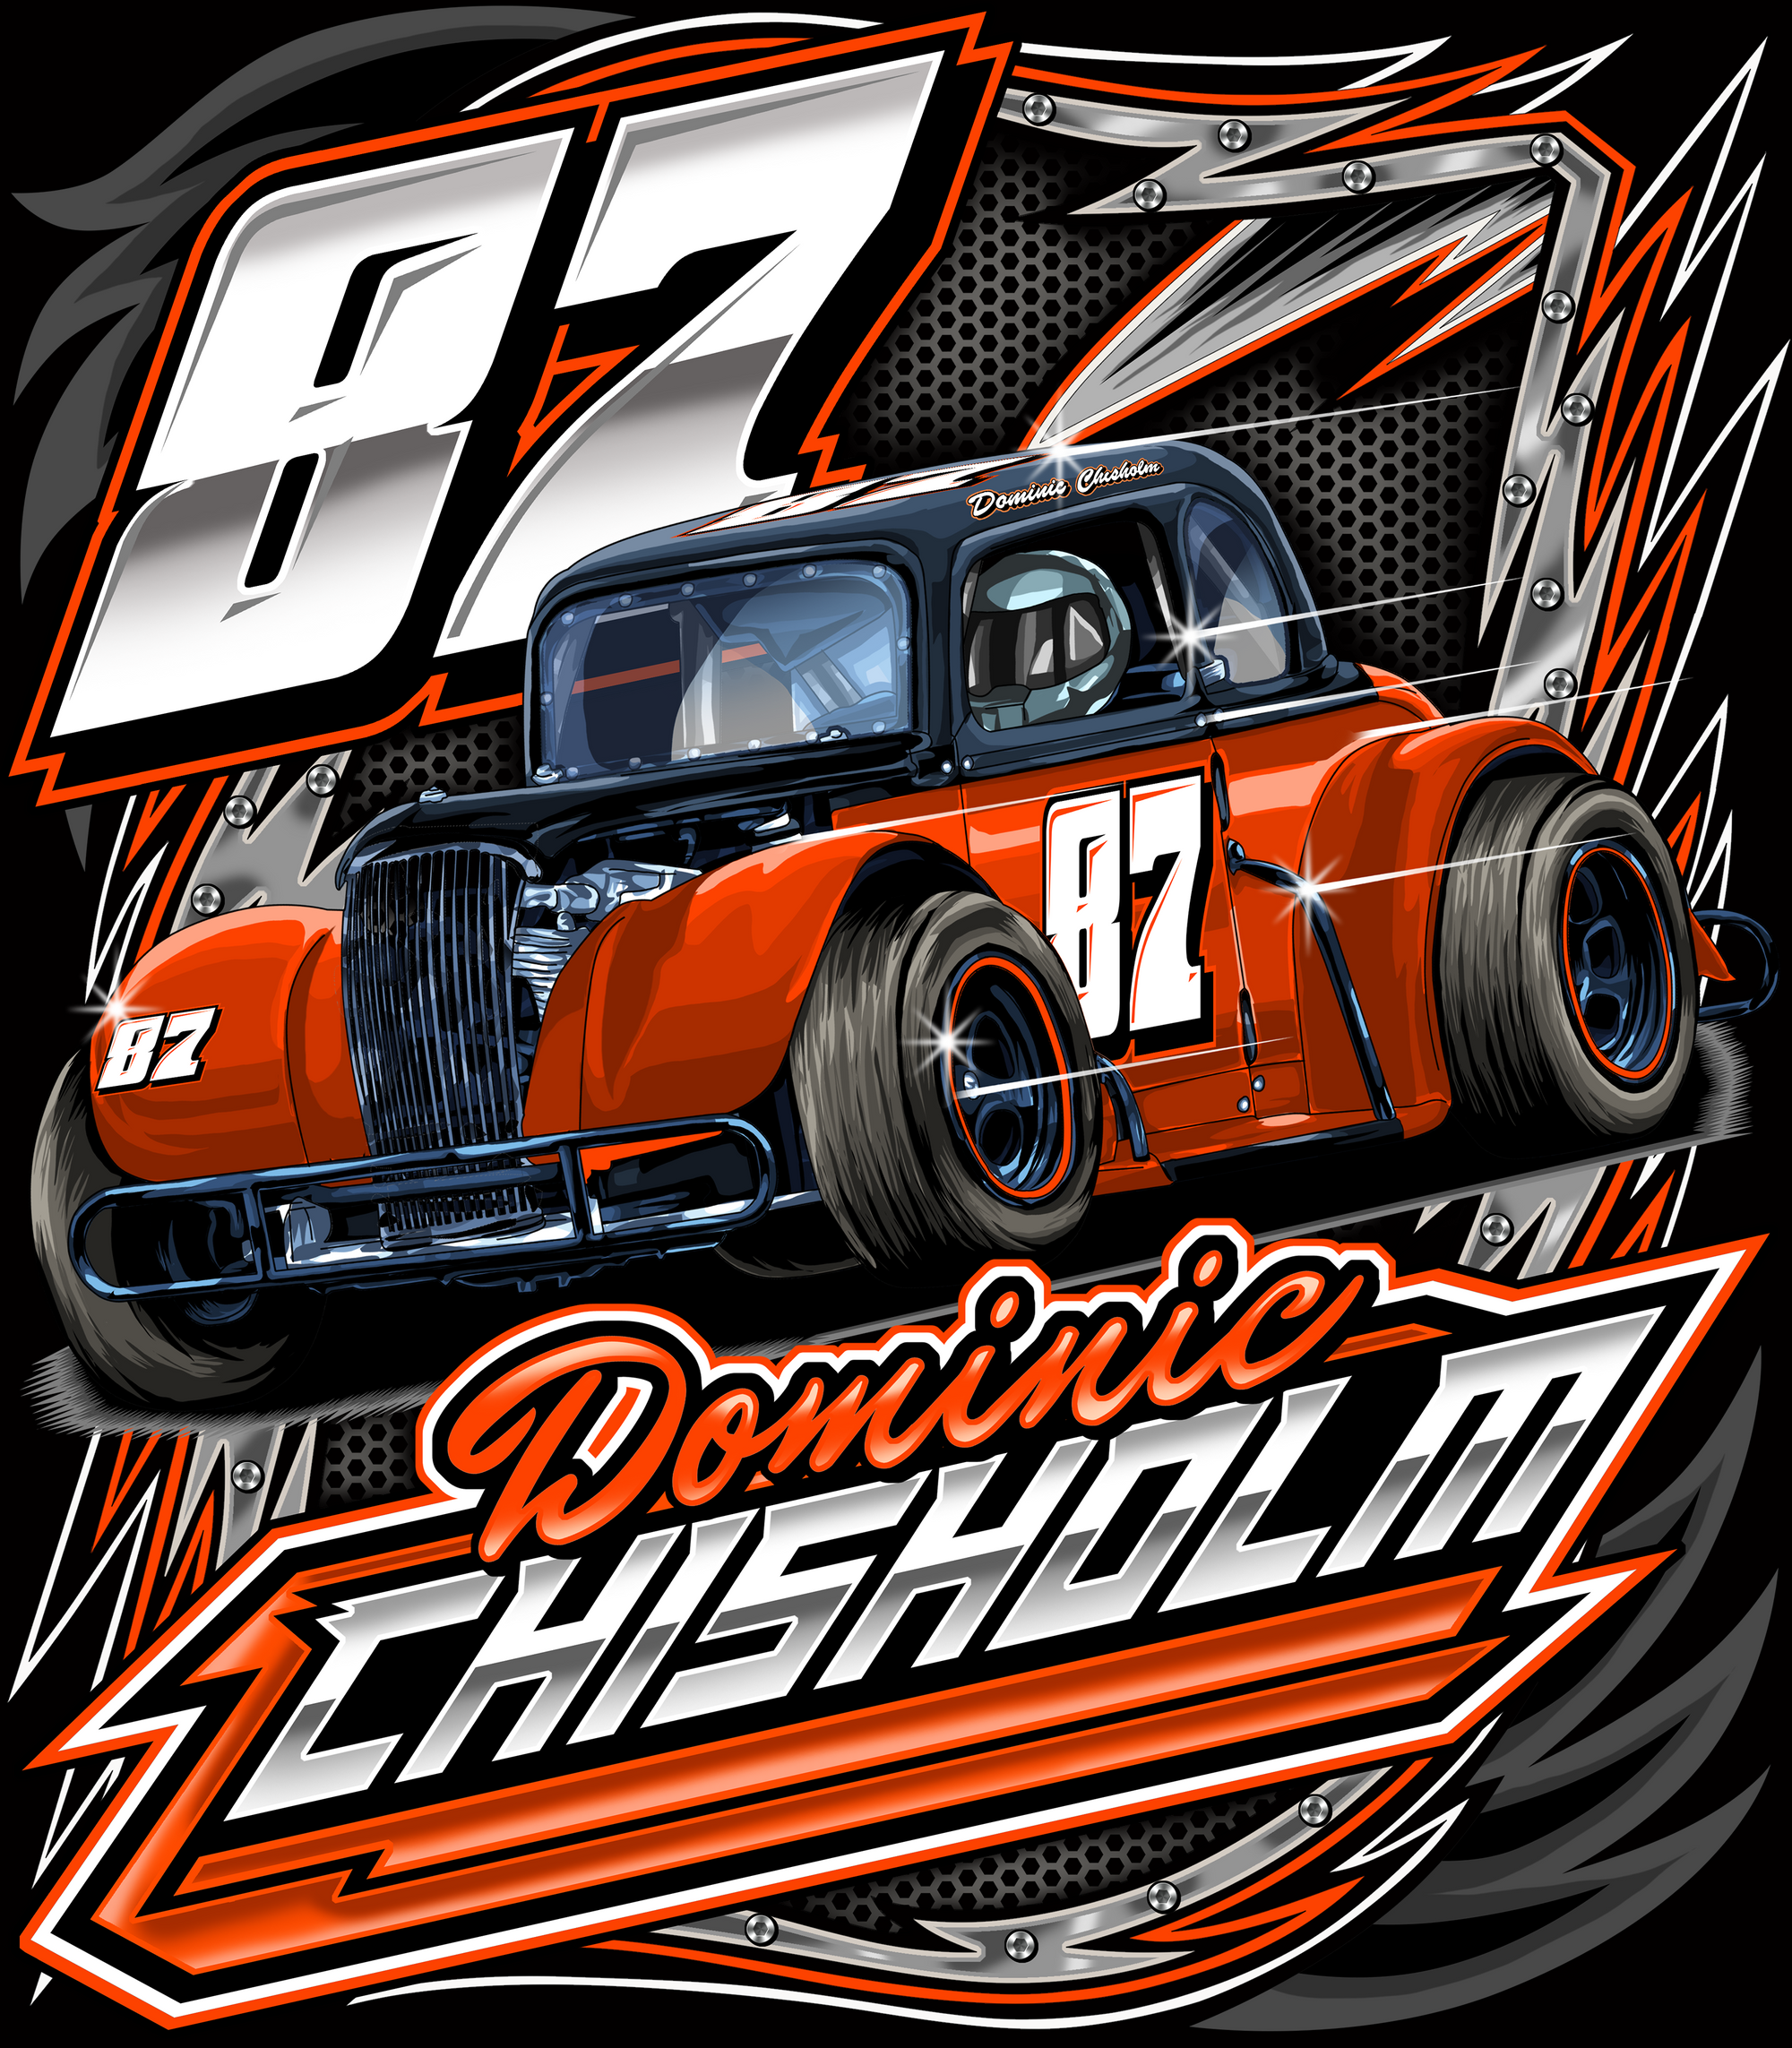 Chisholm Racing